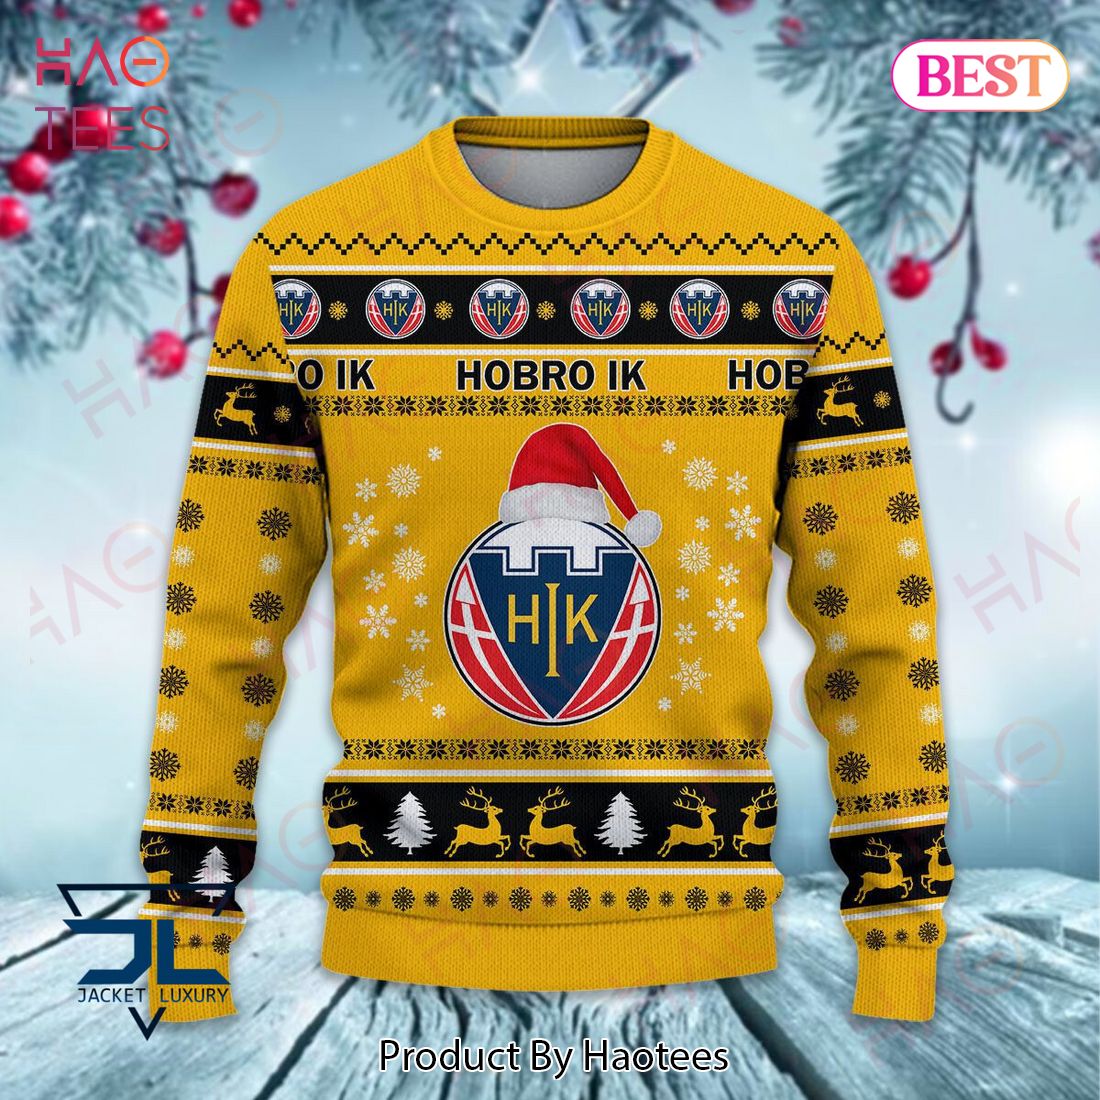 BEST Hobro IK Luxury Brand Sweater Limited Edition